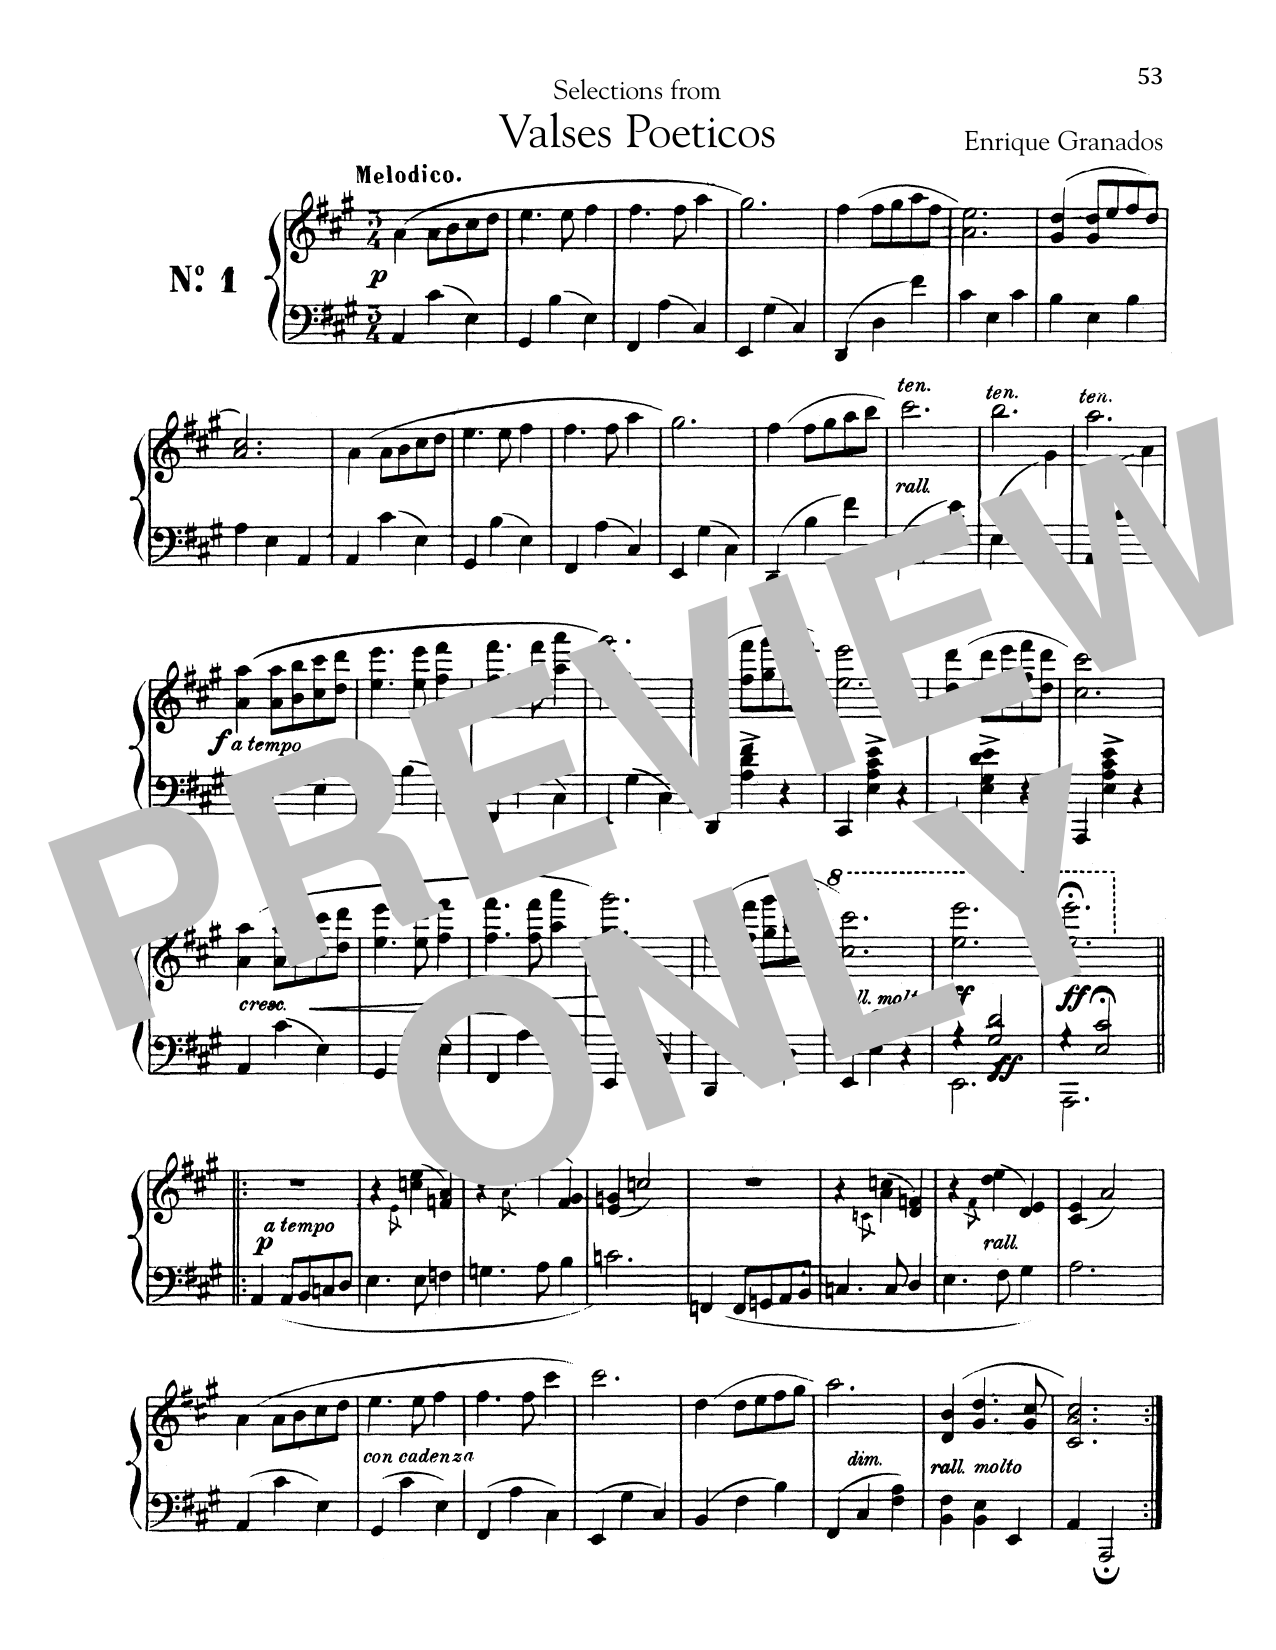 Enrique Granados Melodico Sheet Music Notes & Chords for Piano - Download or Print PDF